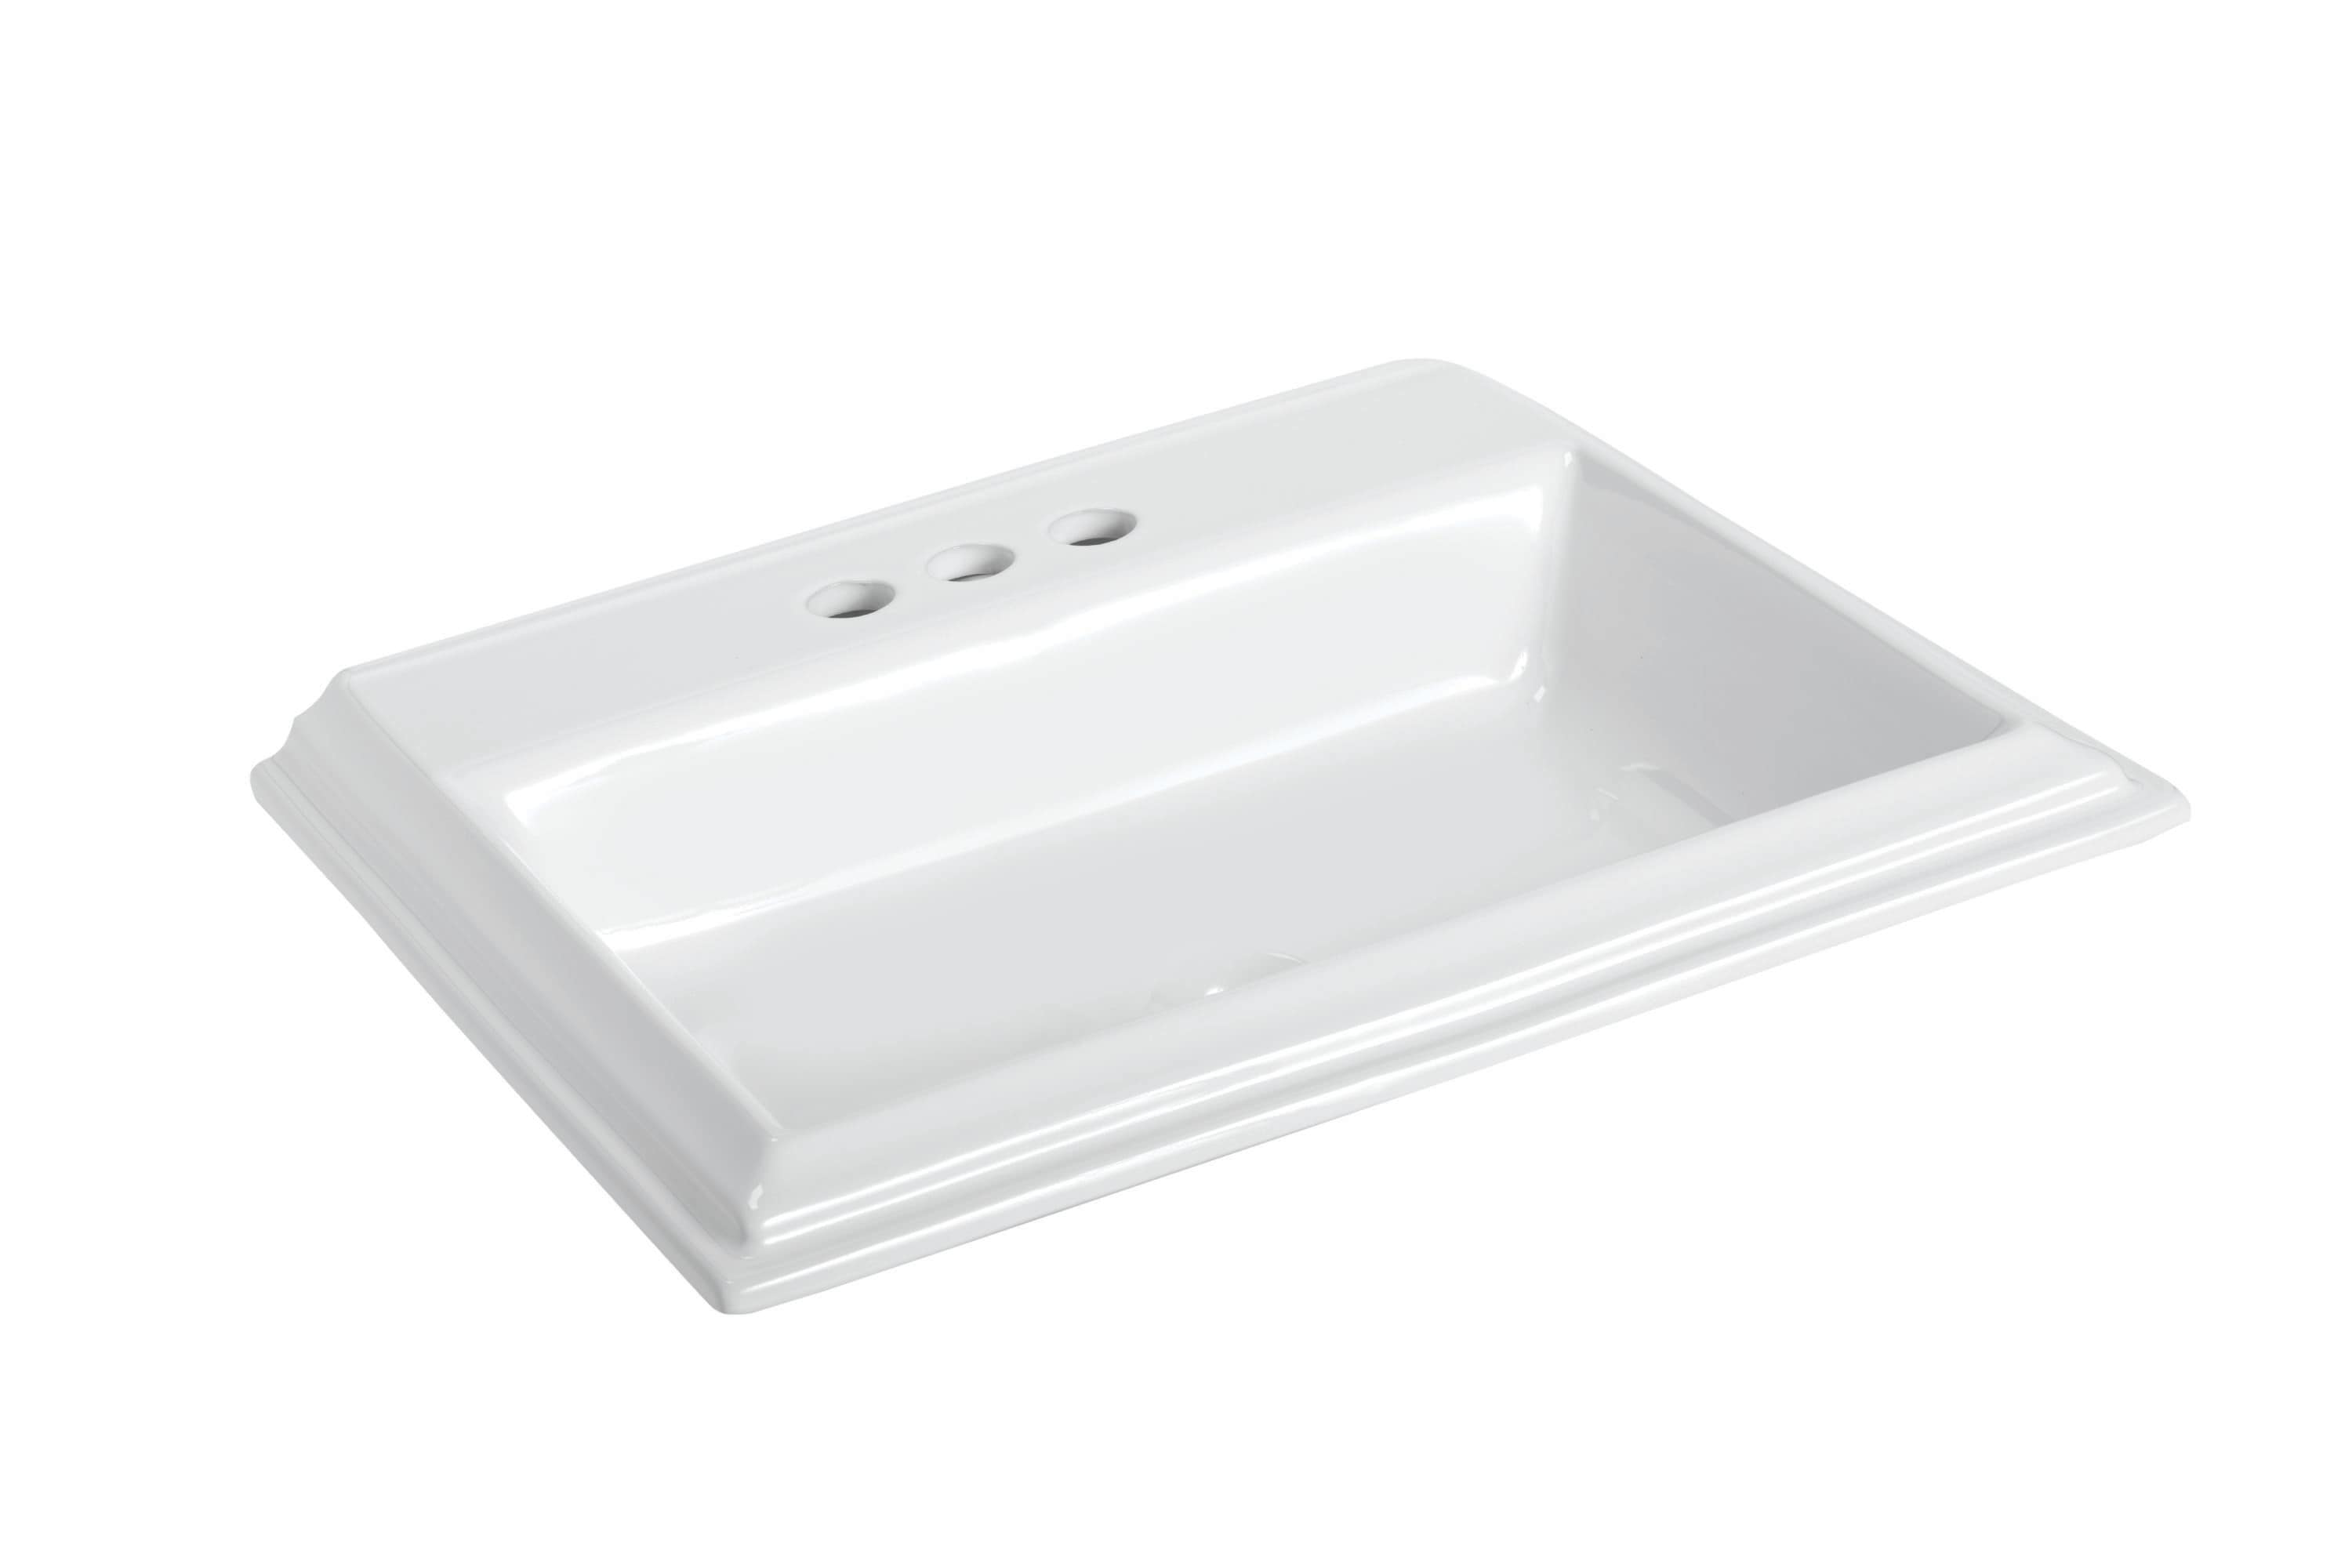 lara 510 pedestal combo bathroom sink in white